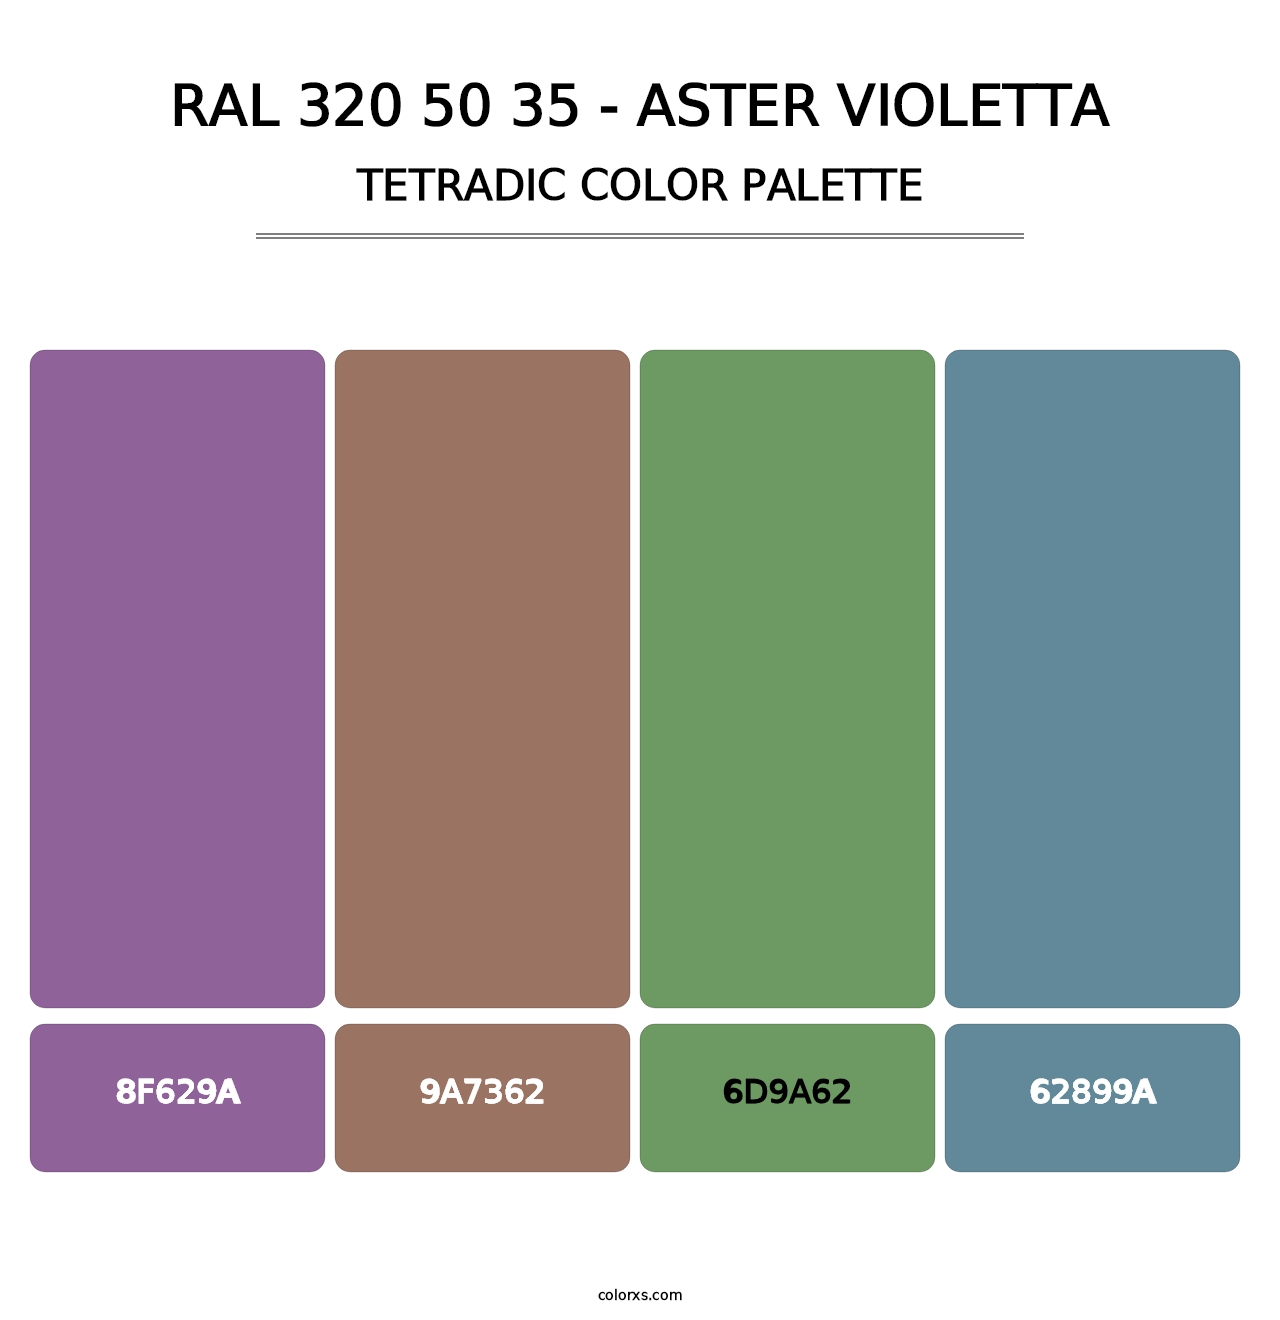 RAL 320 50 35 - Aster Violetta - Tetradic Color Palette